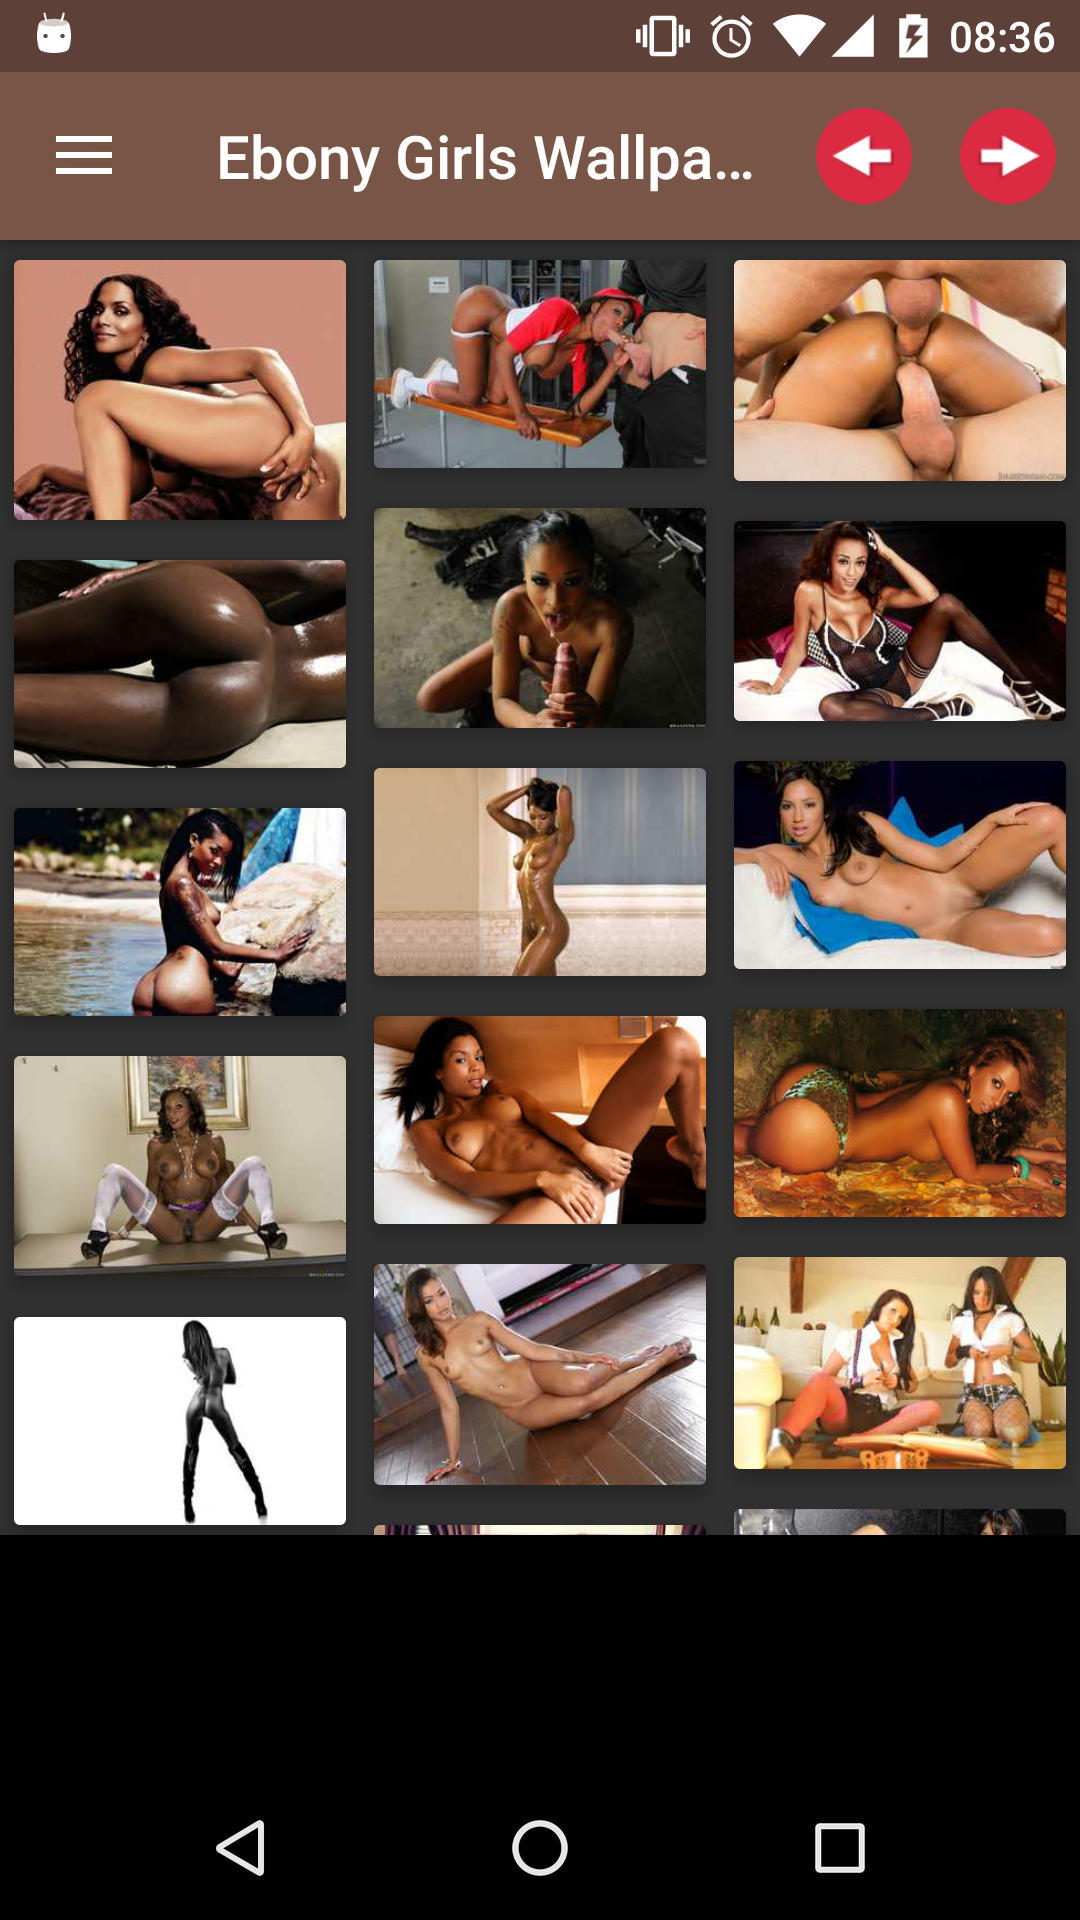 Ebony Girls Wallpapers wallpaper,hot,black,hentai,latest,list,gallerys,galleries,app,photo,adult,wallpapers,download,hentie,sexy,pornstar,pics,pornstars,image,ebony,henti